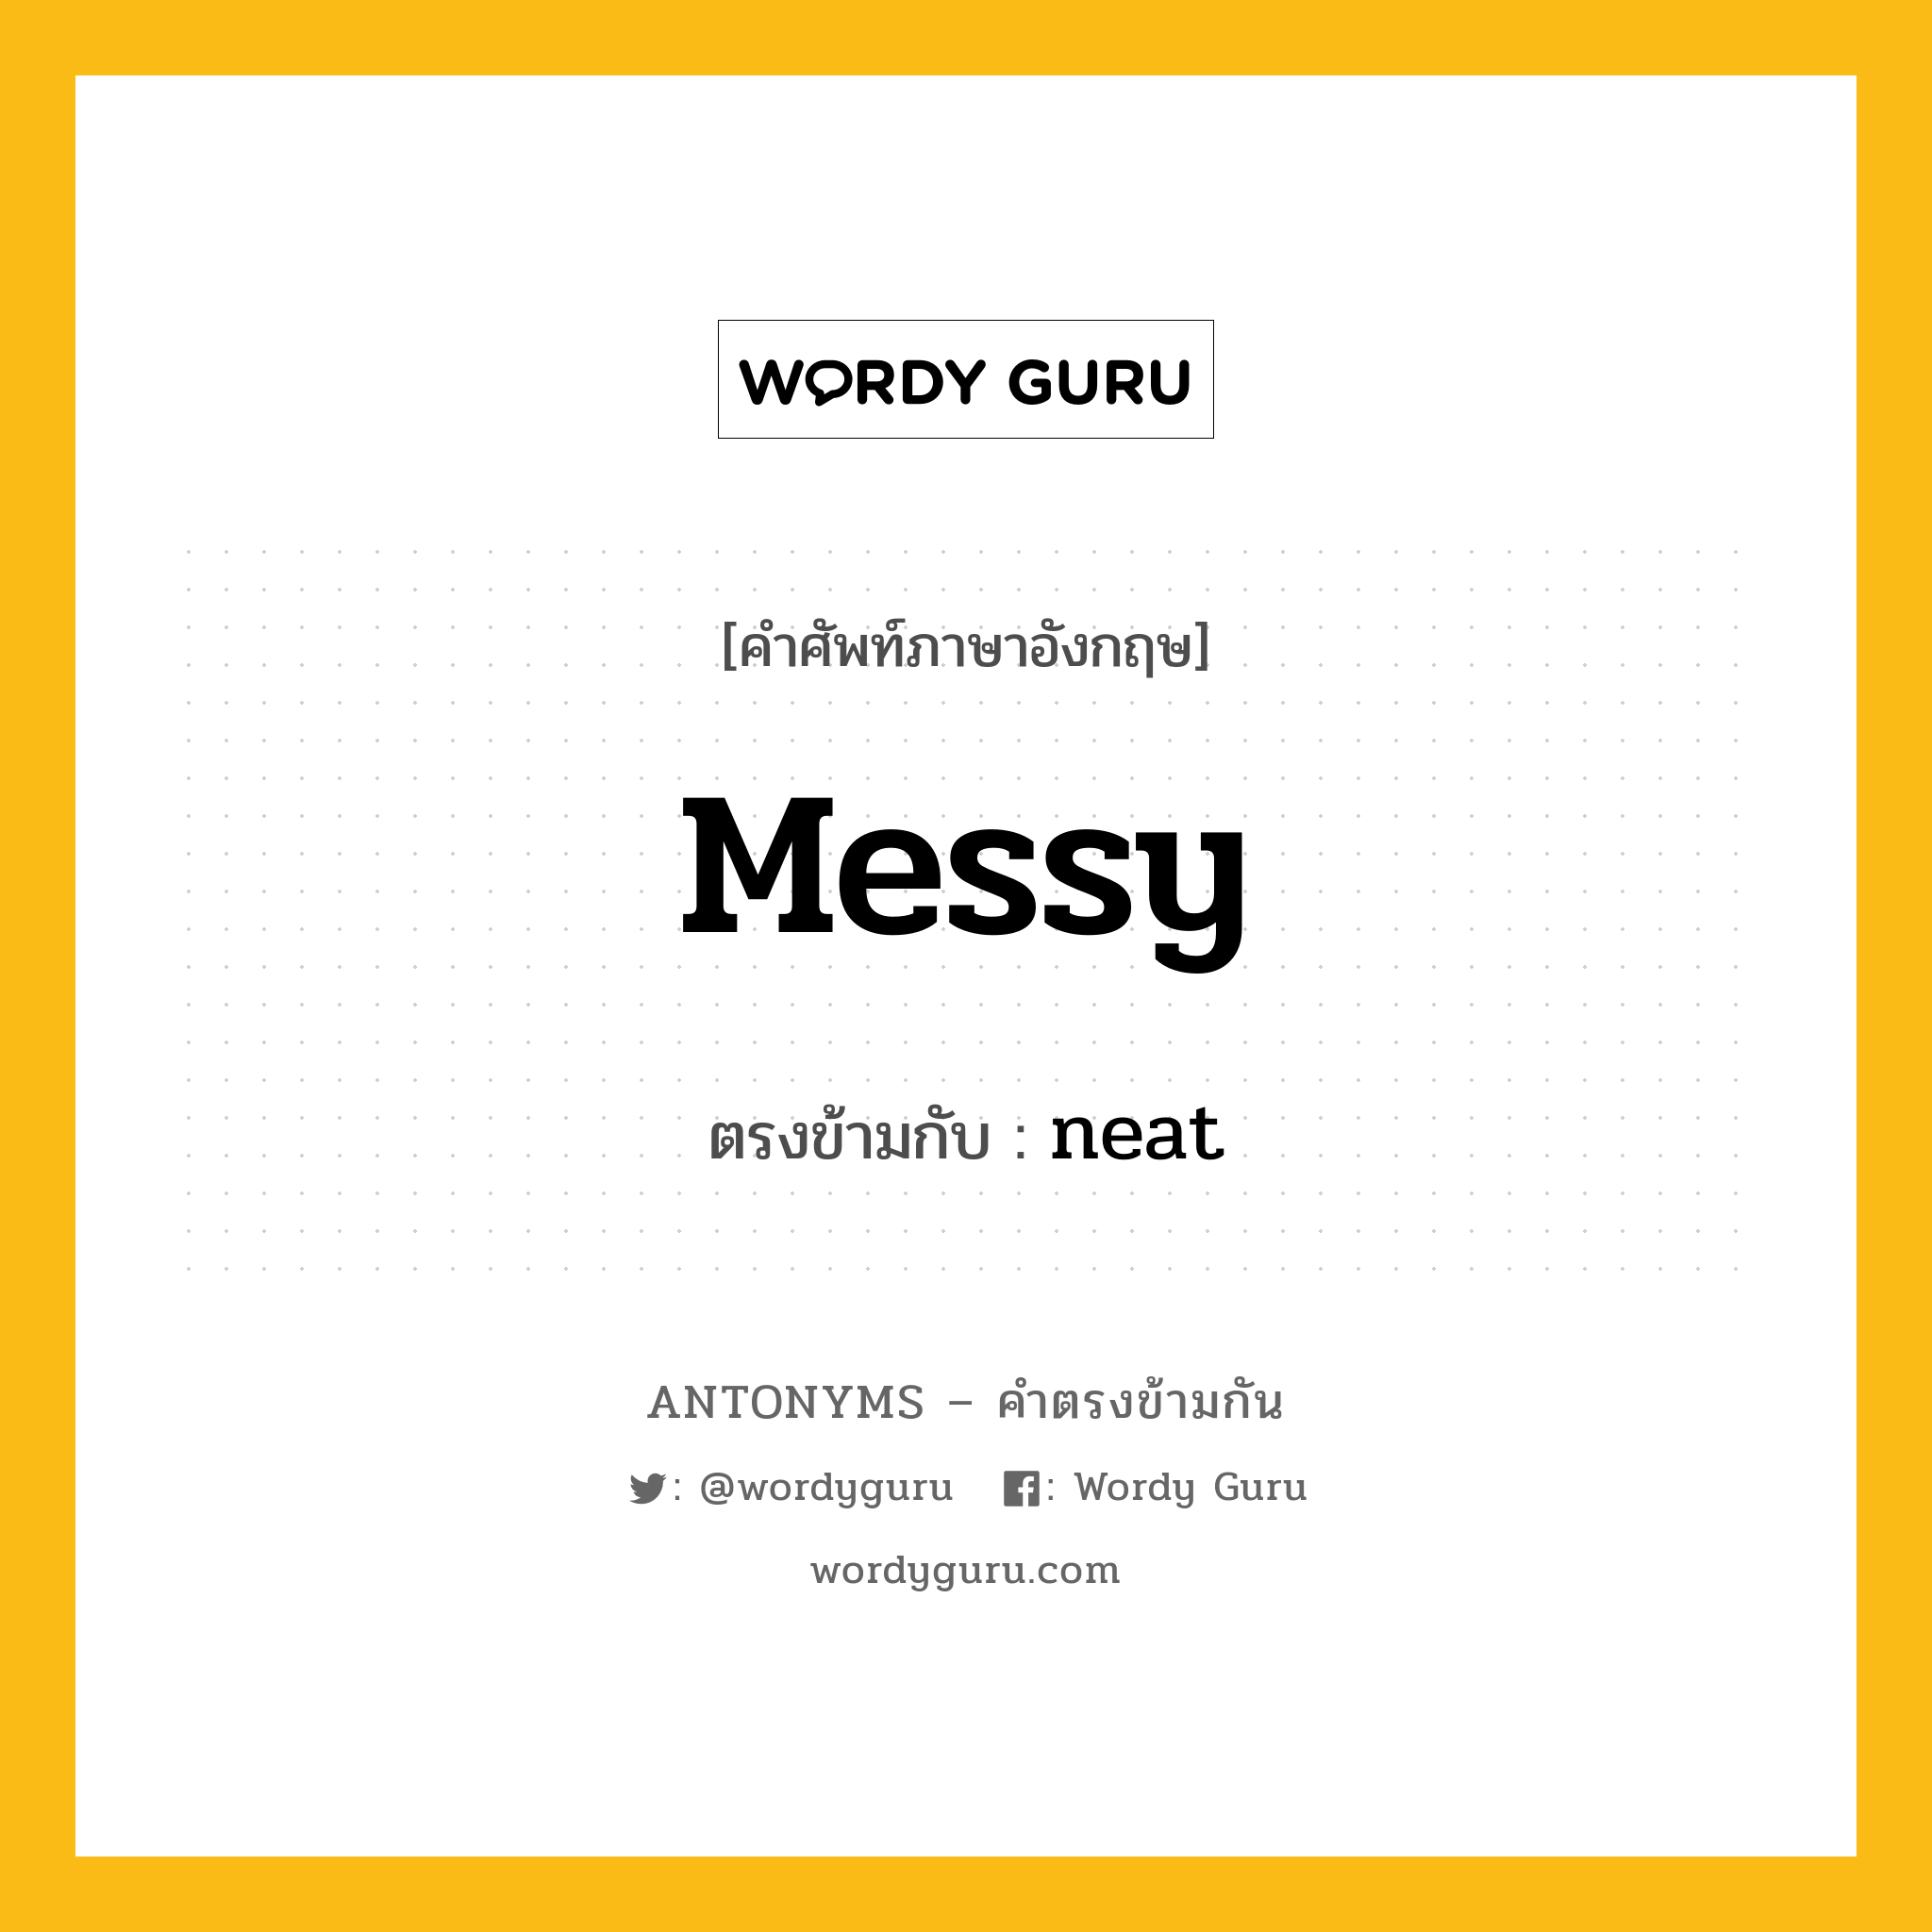 messy เป็นคำตรงข้ามกับคำไหนบ้าง?, คำศัพท์ภาษาอังกฤษ messy ตรงข้ามกับ neat หมวด neat